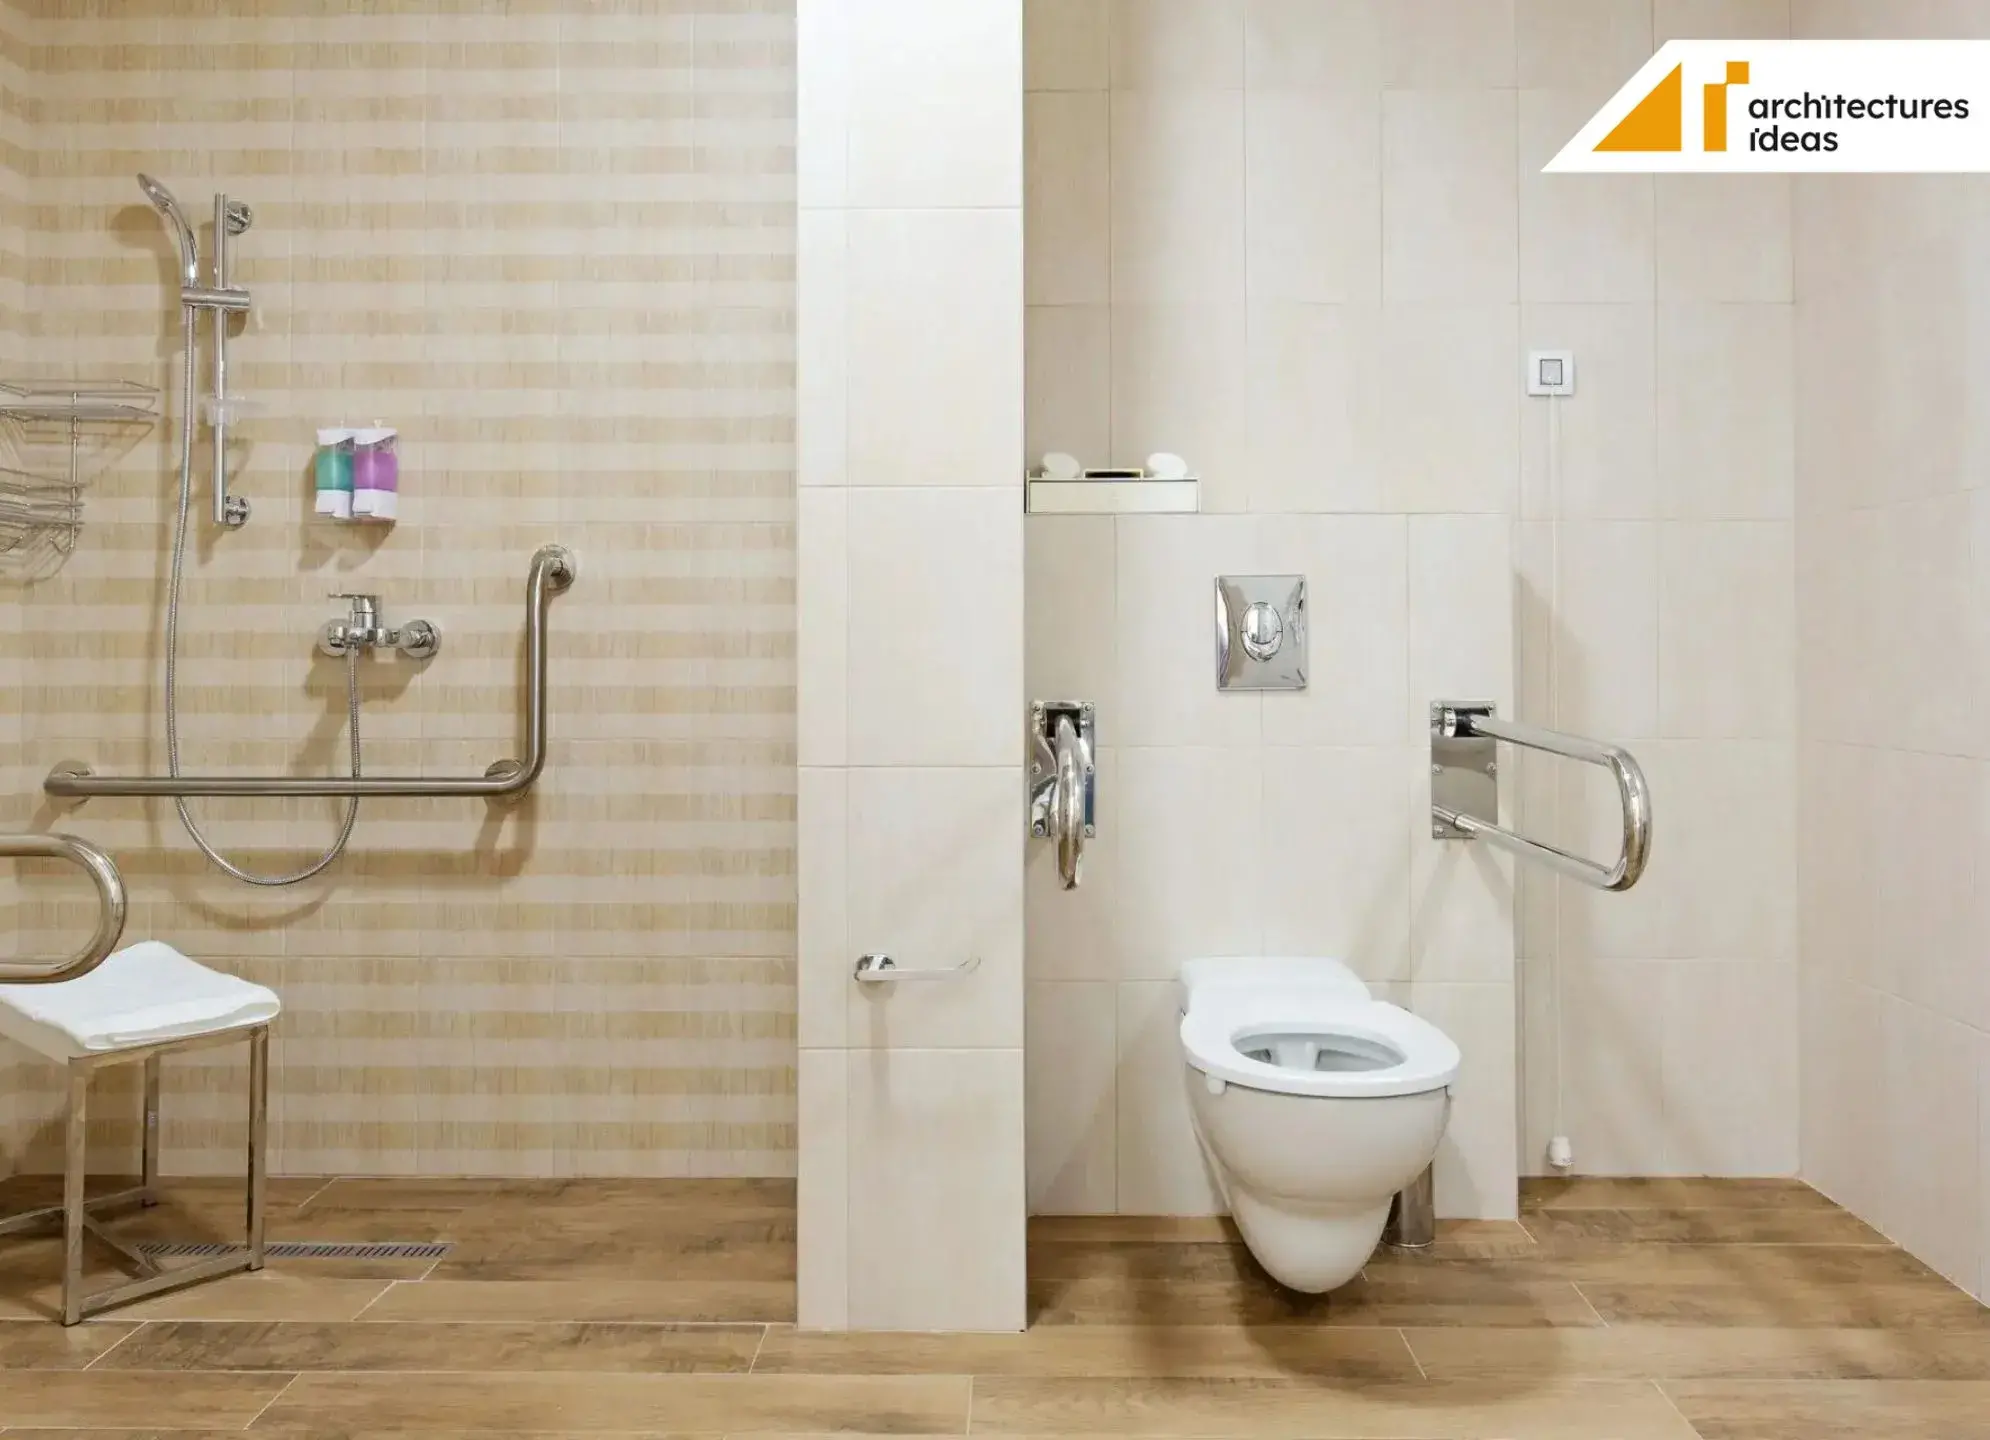 Ada Bathroom Layout Public Restrooms Requirements Plans Architectures Ideas